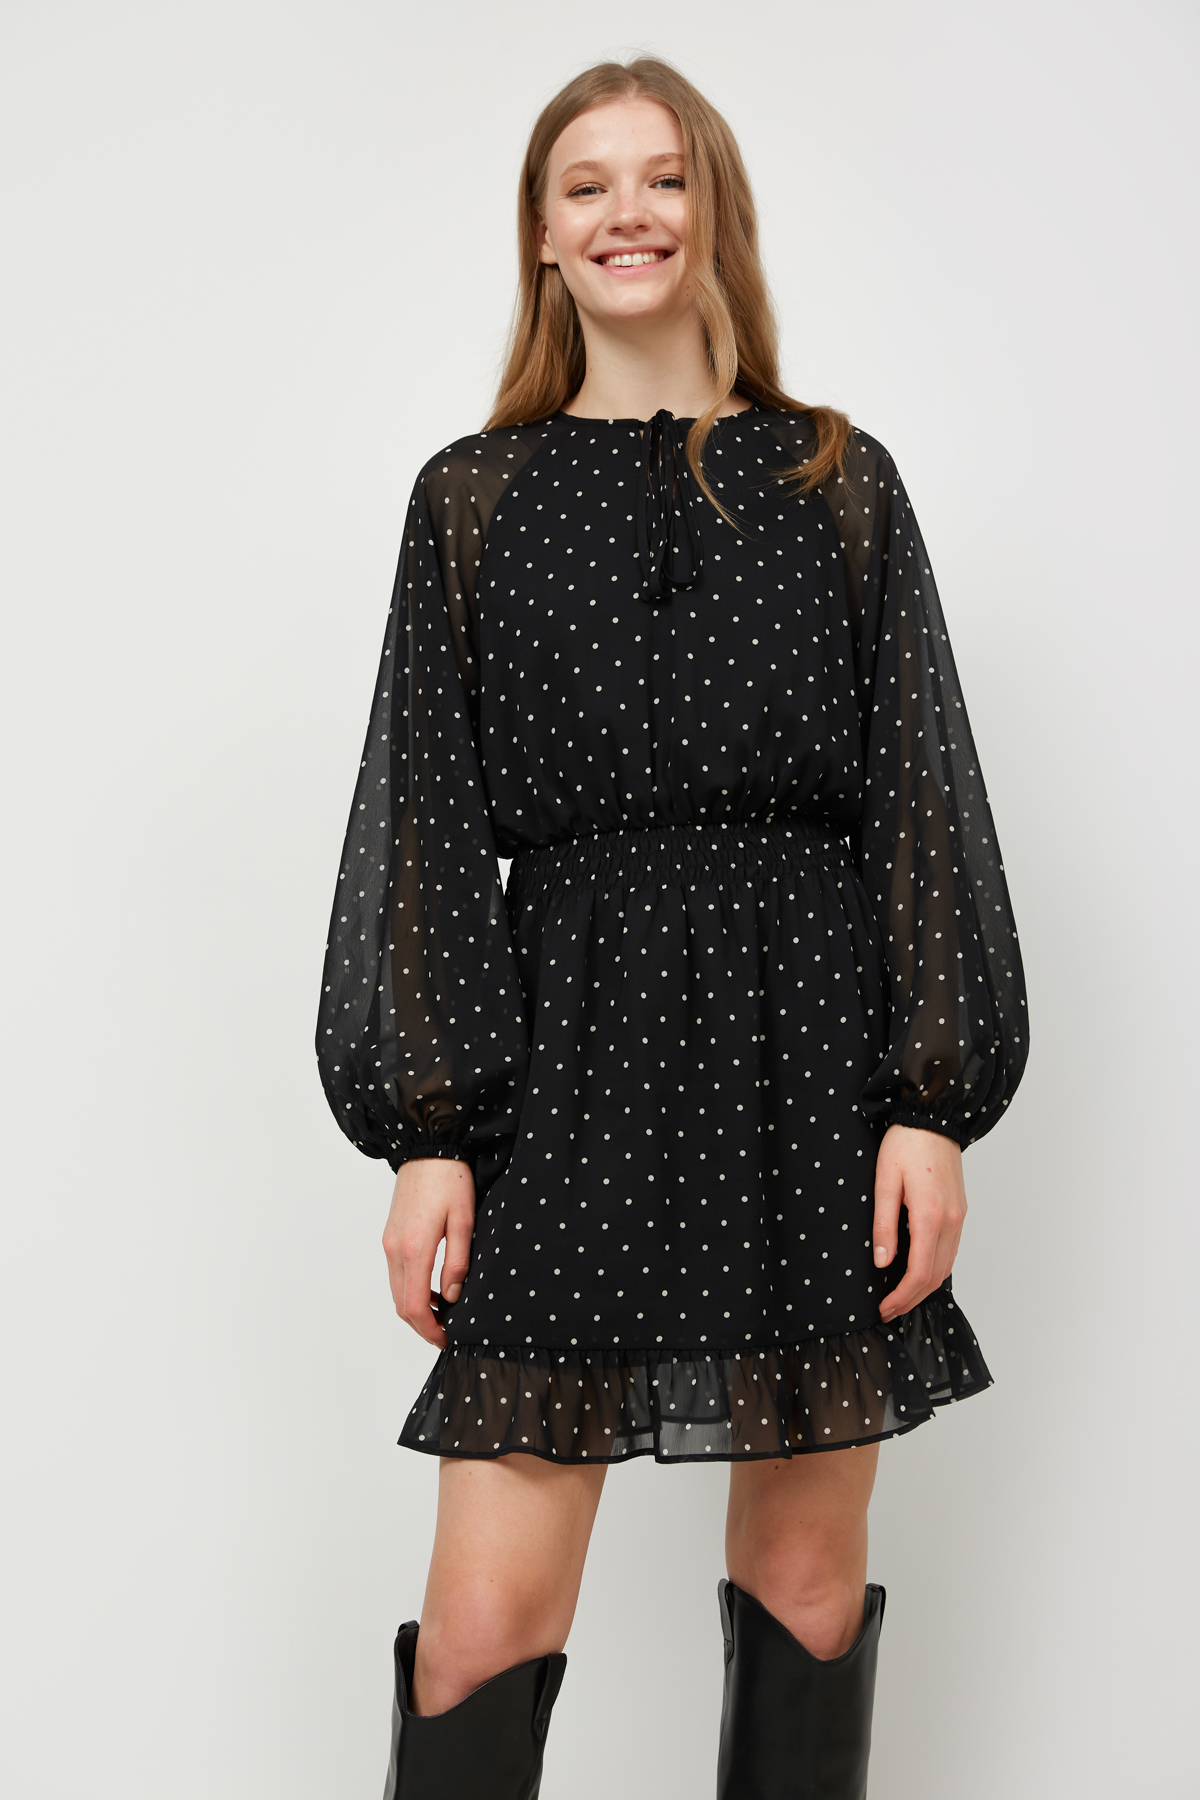 Short dress in chiffon with white polka dots print, photo 1